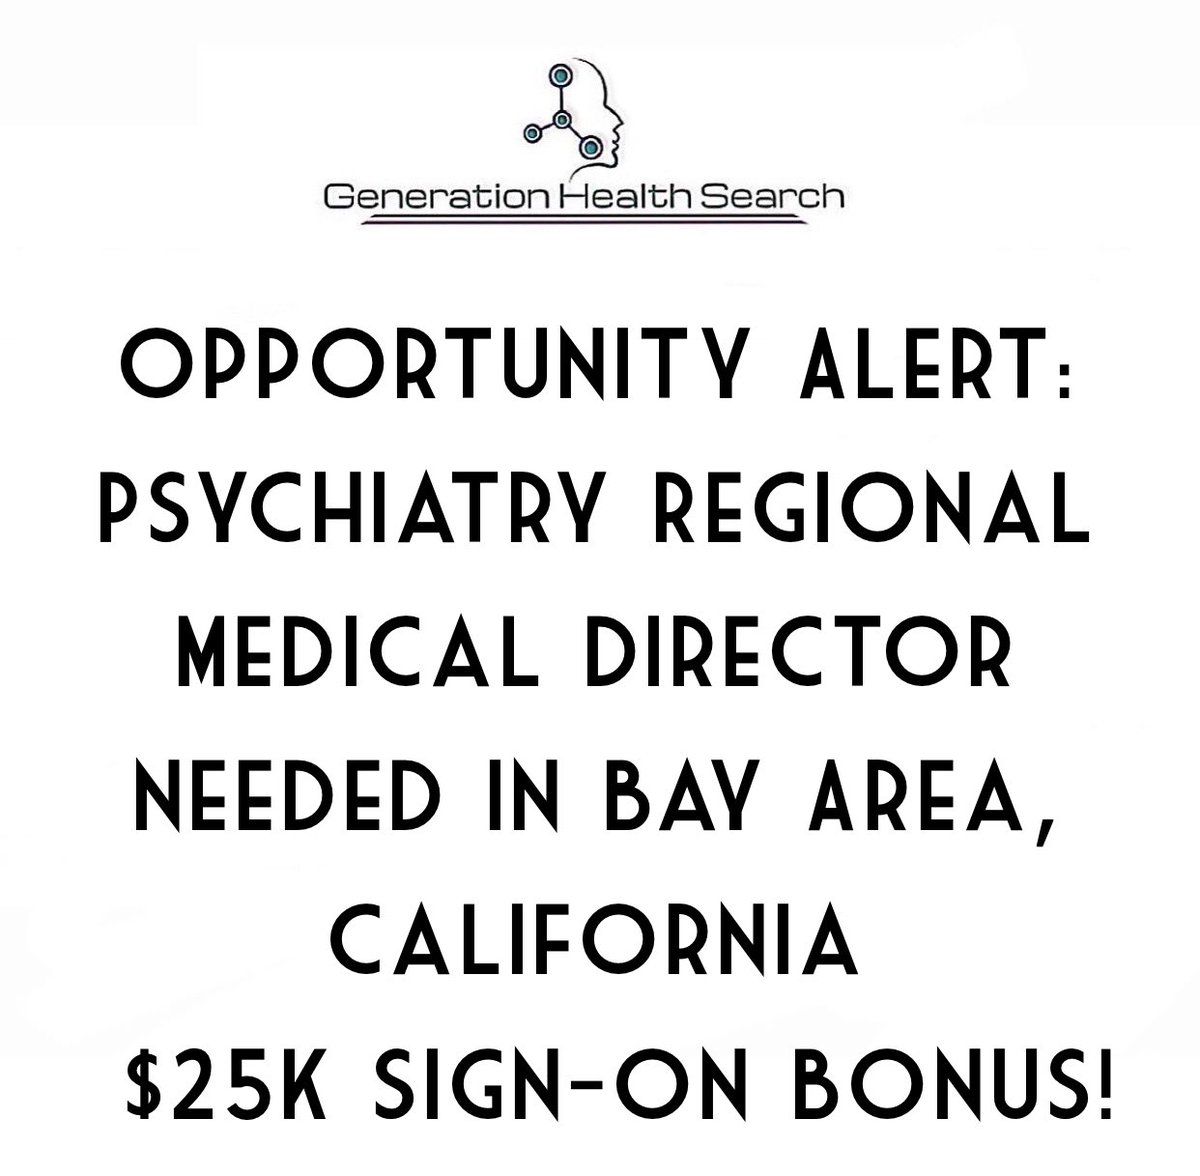 Seeking a Psychiatry Regional Medical Director in the vibrant Bay Area, California. $25K sign-on bonus! #HealthcareCareers #MedicalDirector #NowHiring #CaliforniaJobs #CareerGrowth #ApplyToday #GenerationHealthSearch 🚀 #ApplyNow Apply at recruiting@generationhealthsearch.com